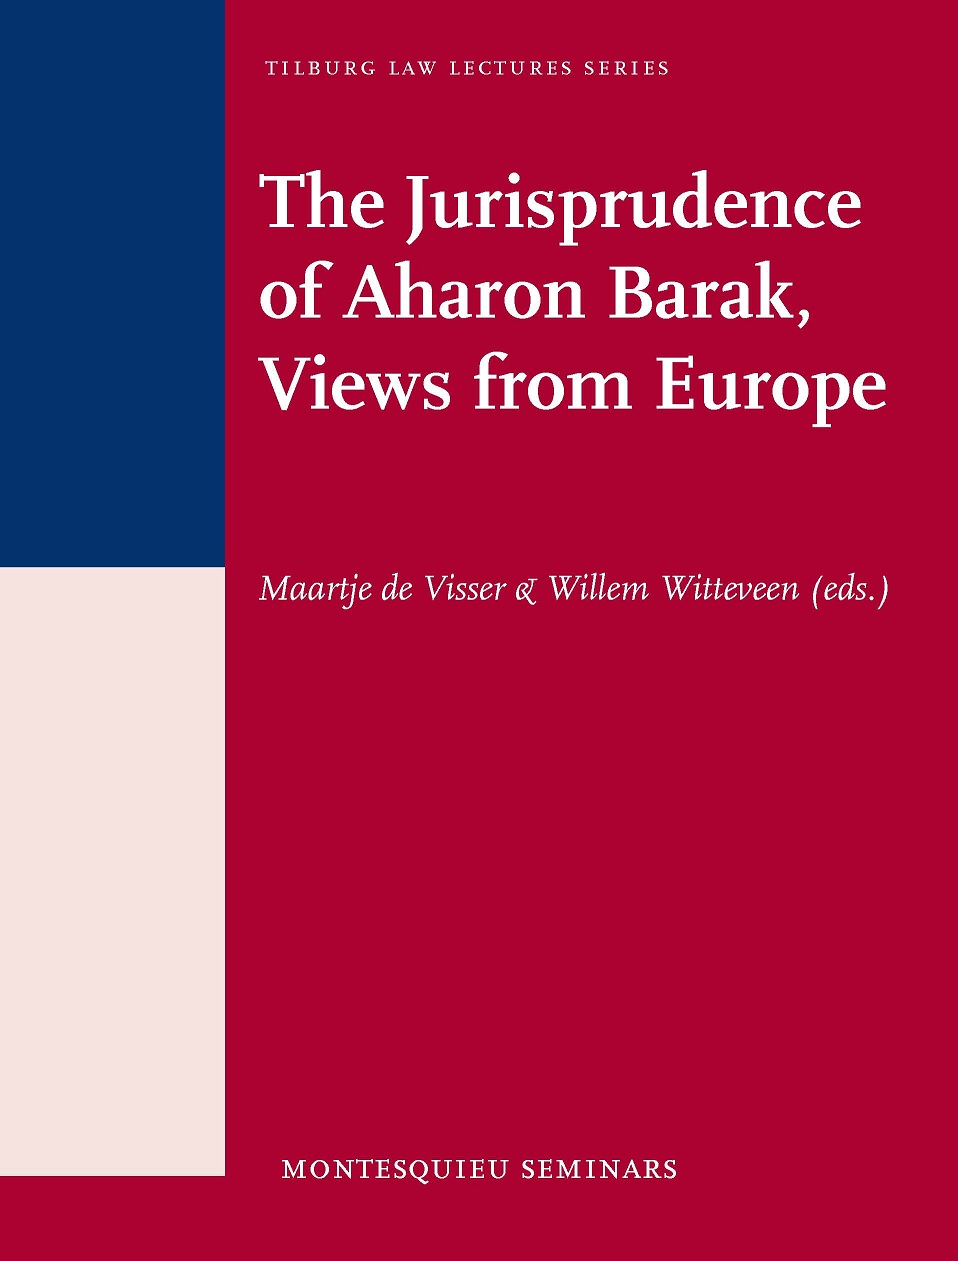 The Jurisprudence of Aharon Barak: Views from Europe